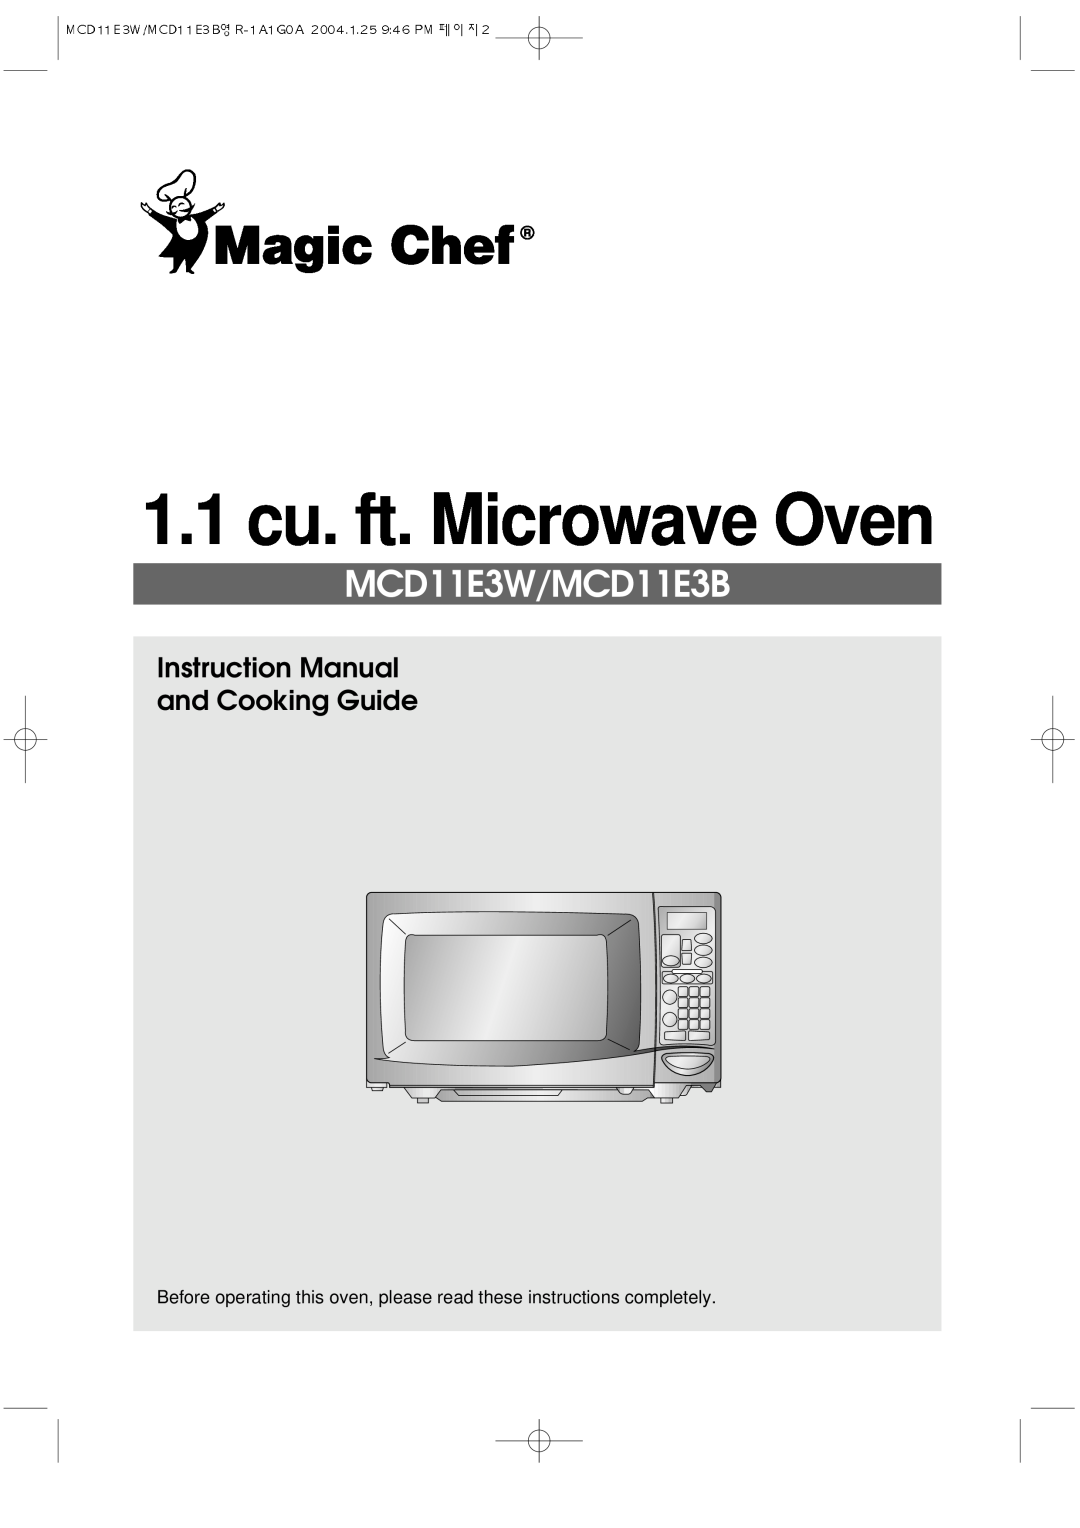 Magic Chef instruction manual 1.1 cu. ft. Microwave Oven, MCD11E3W/MCD11E3B 